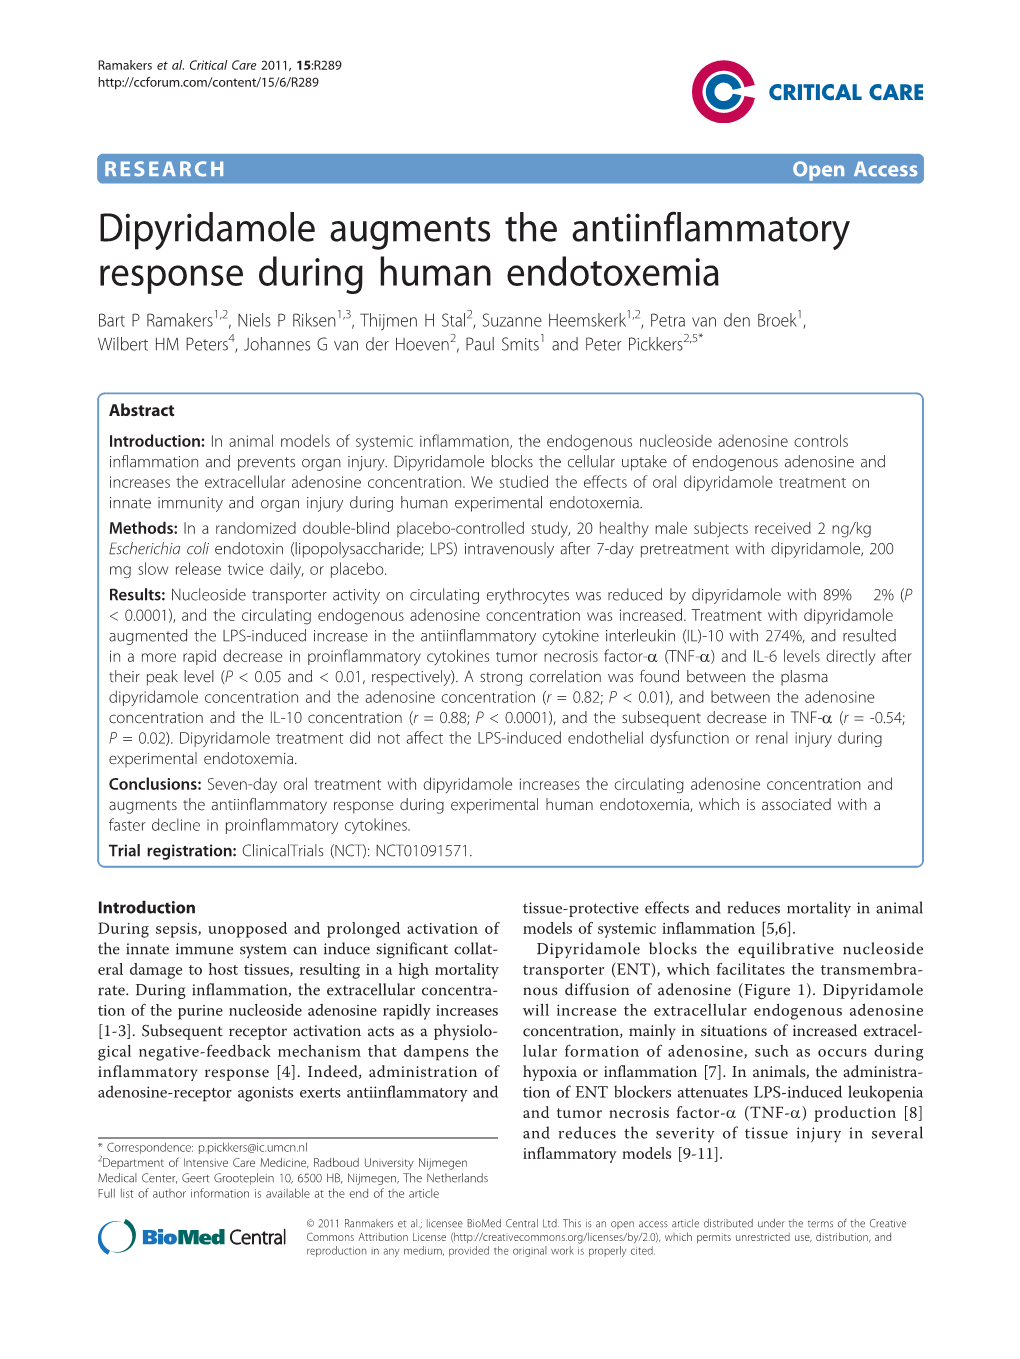 Dipyridamole Augments the Antiinflammatory Response During